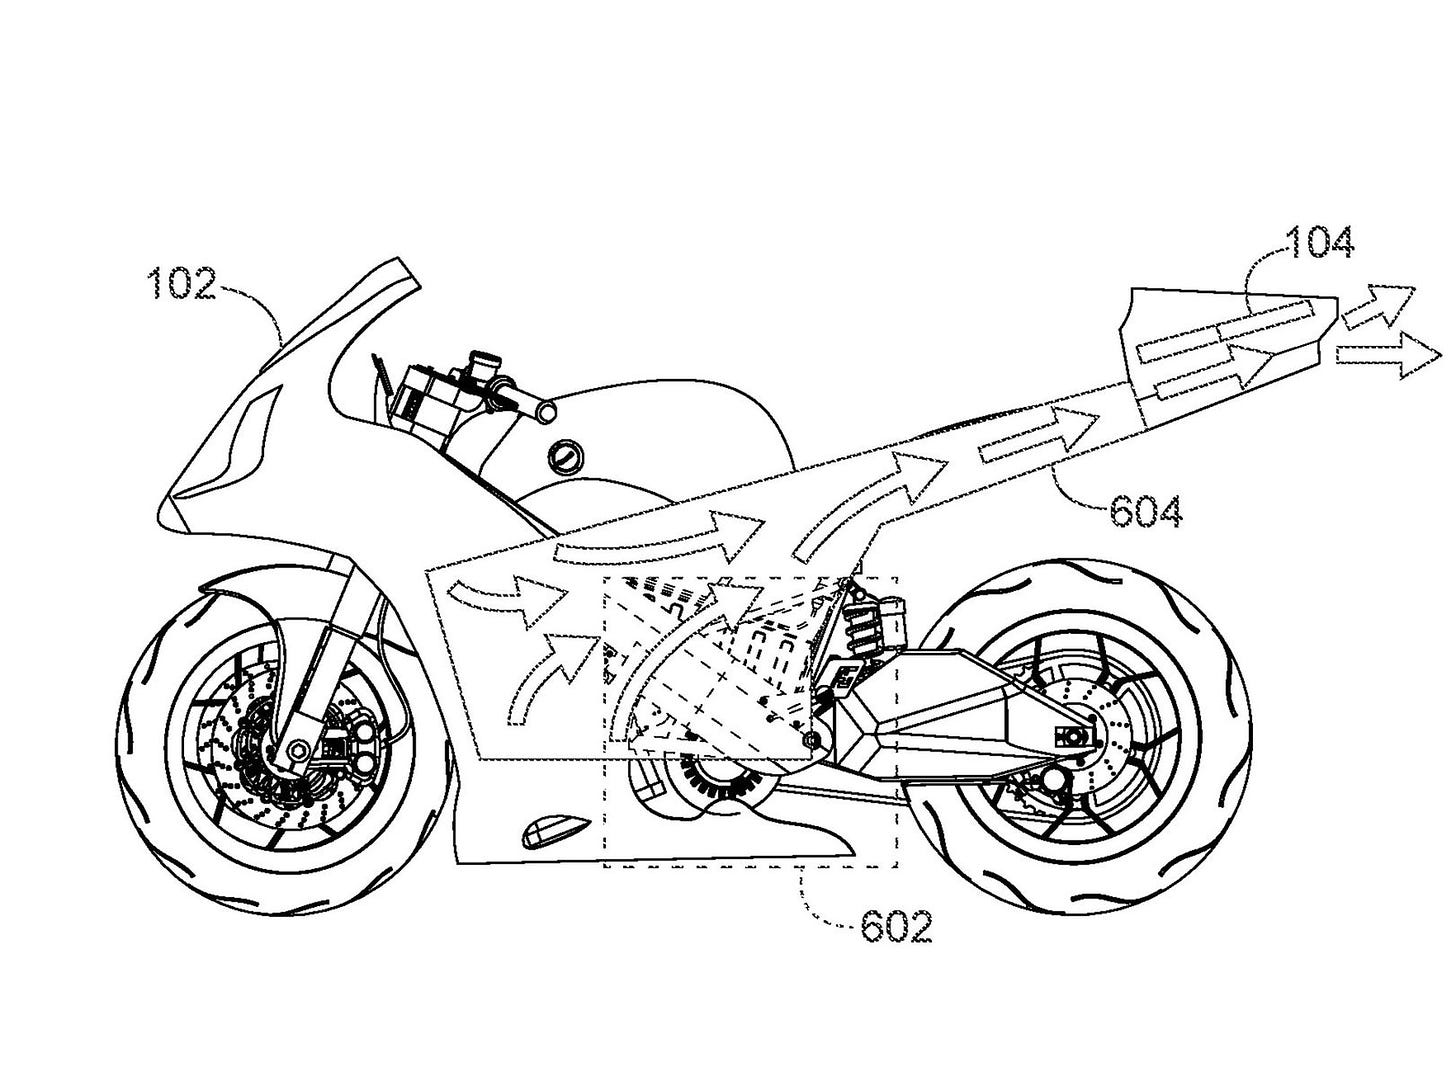 Honda patent drawing